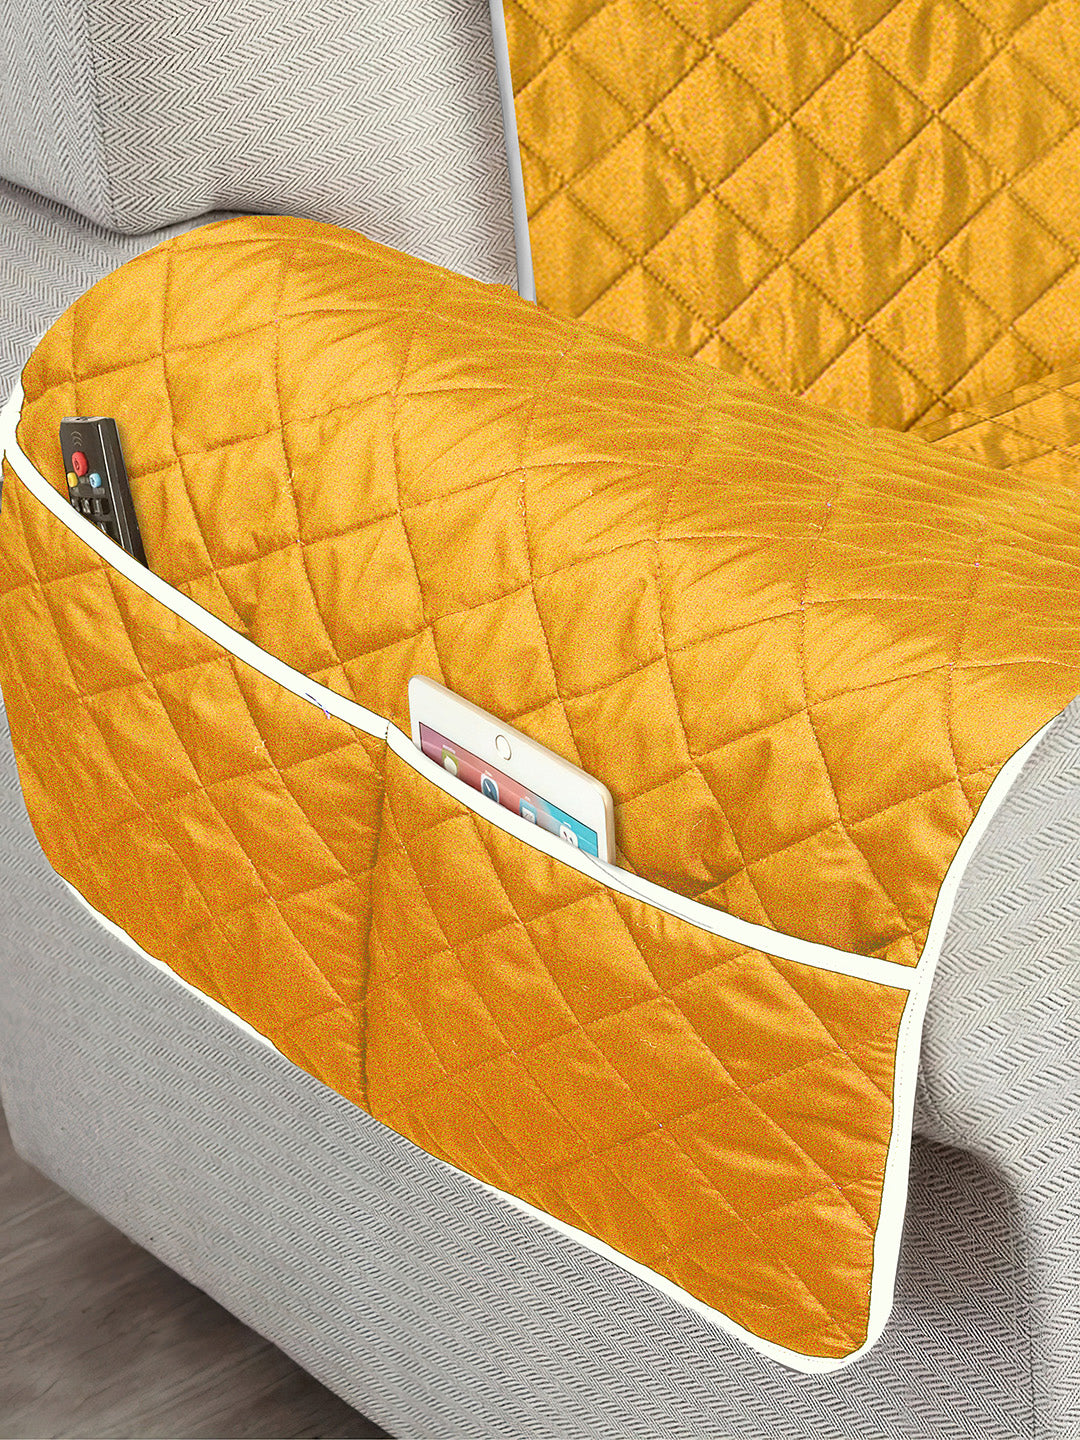 3 Seater Yellow